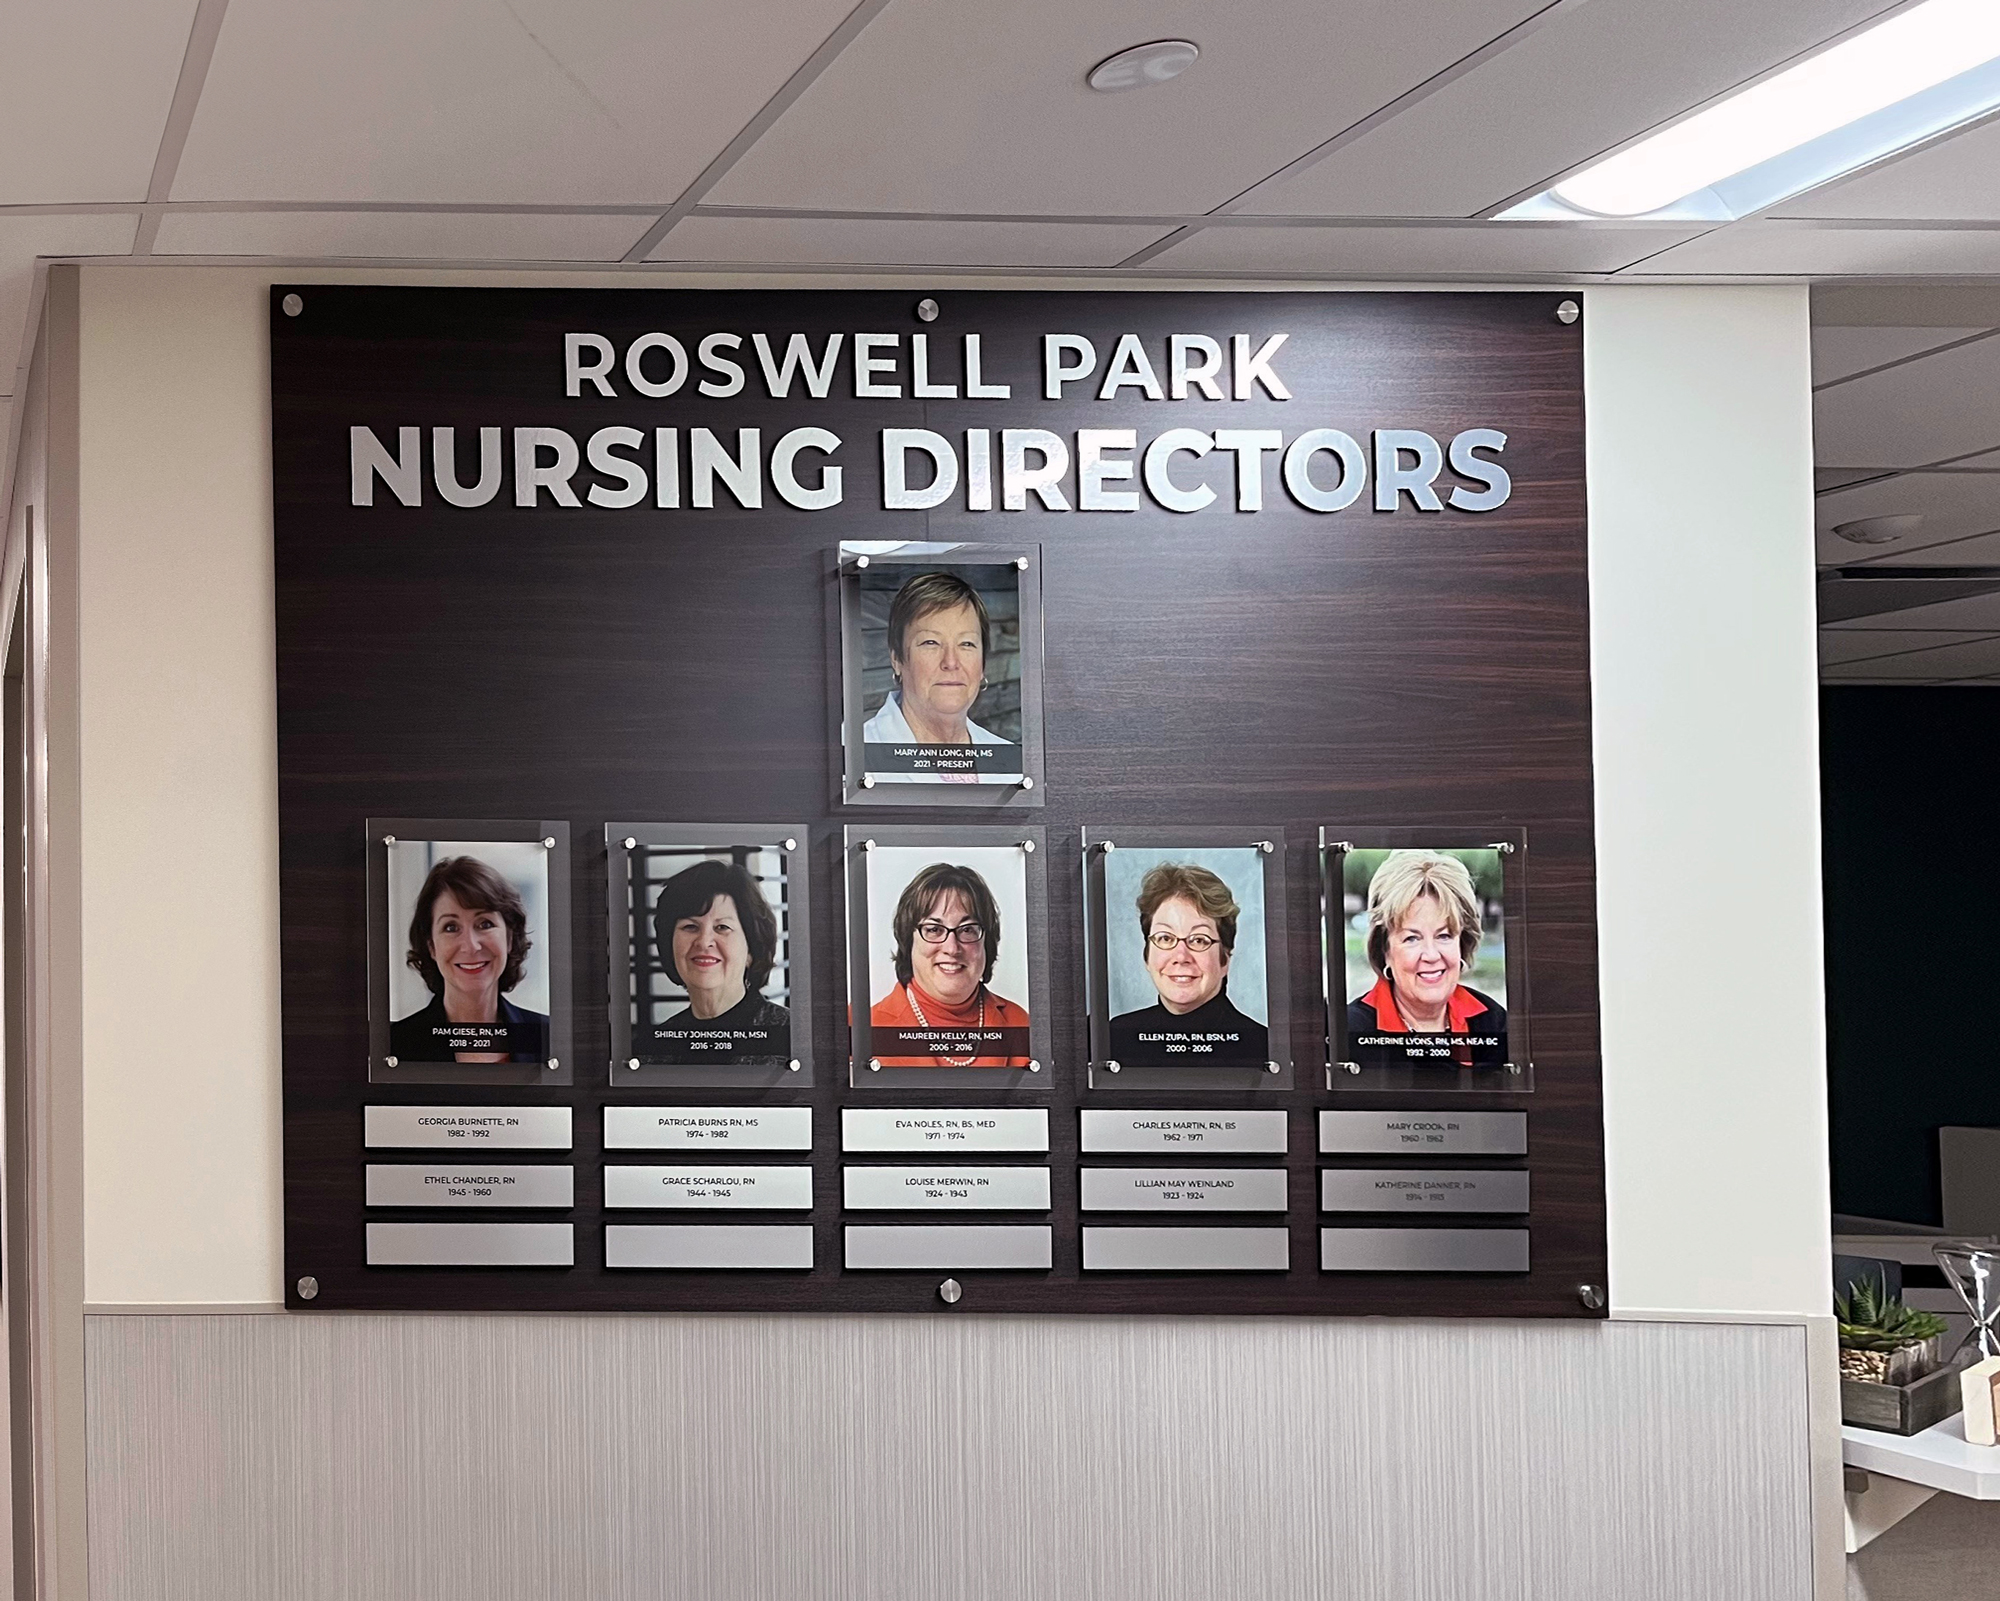 Roswell Park nursing directors large interior wall display